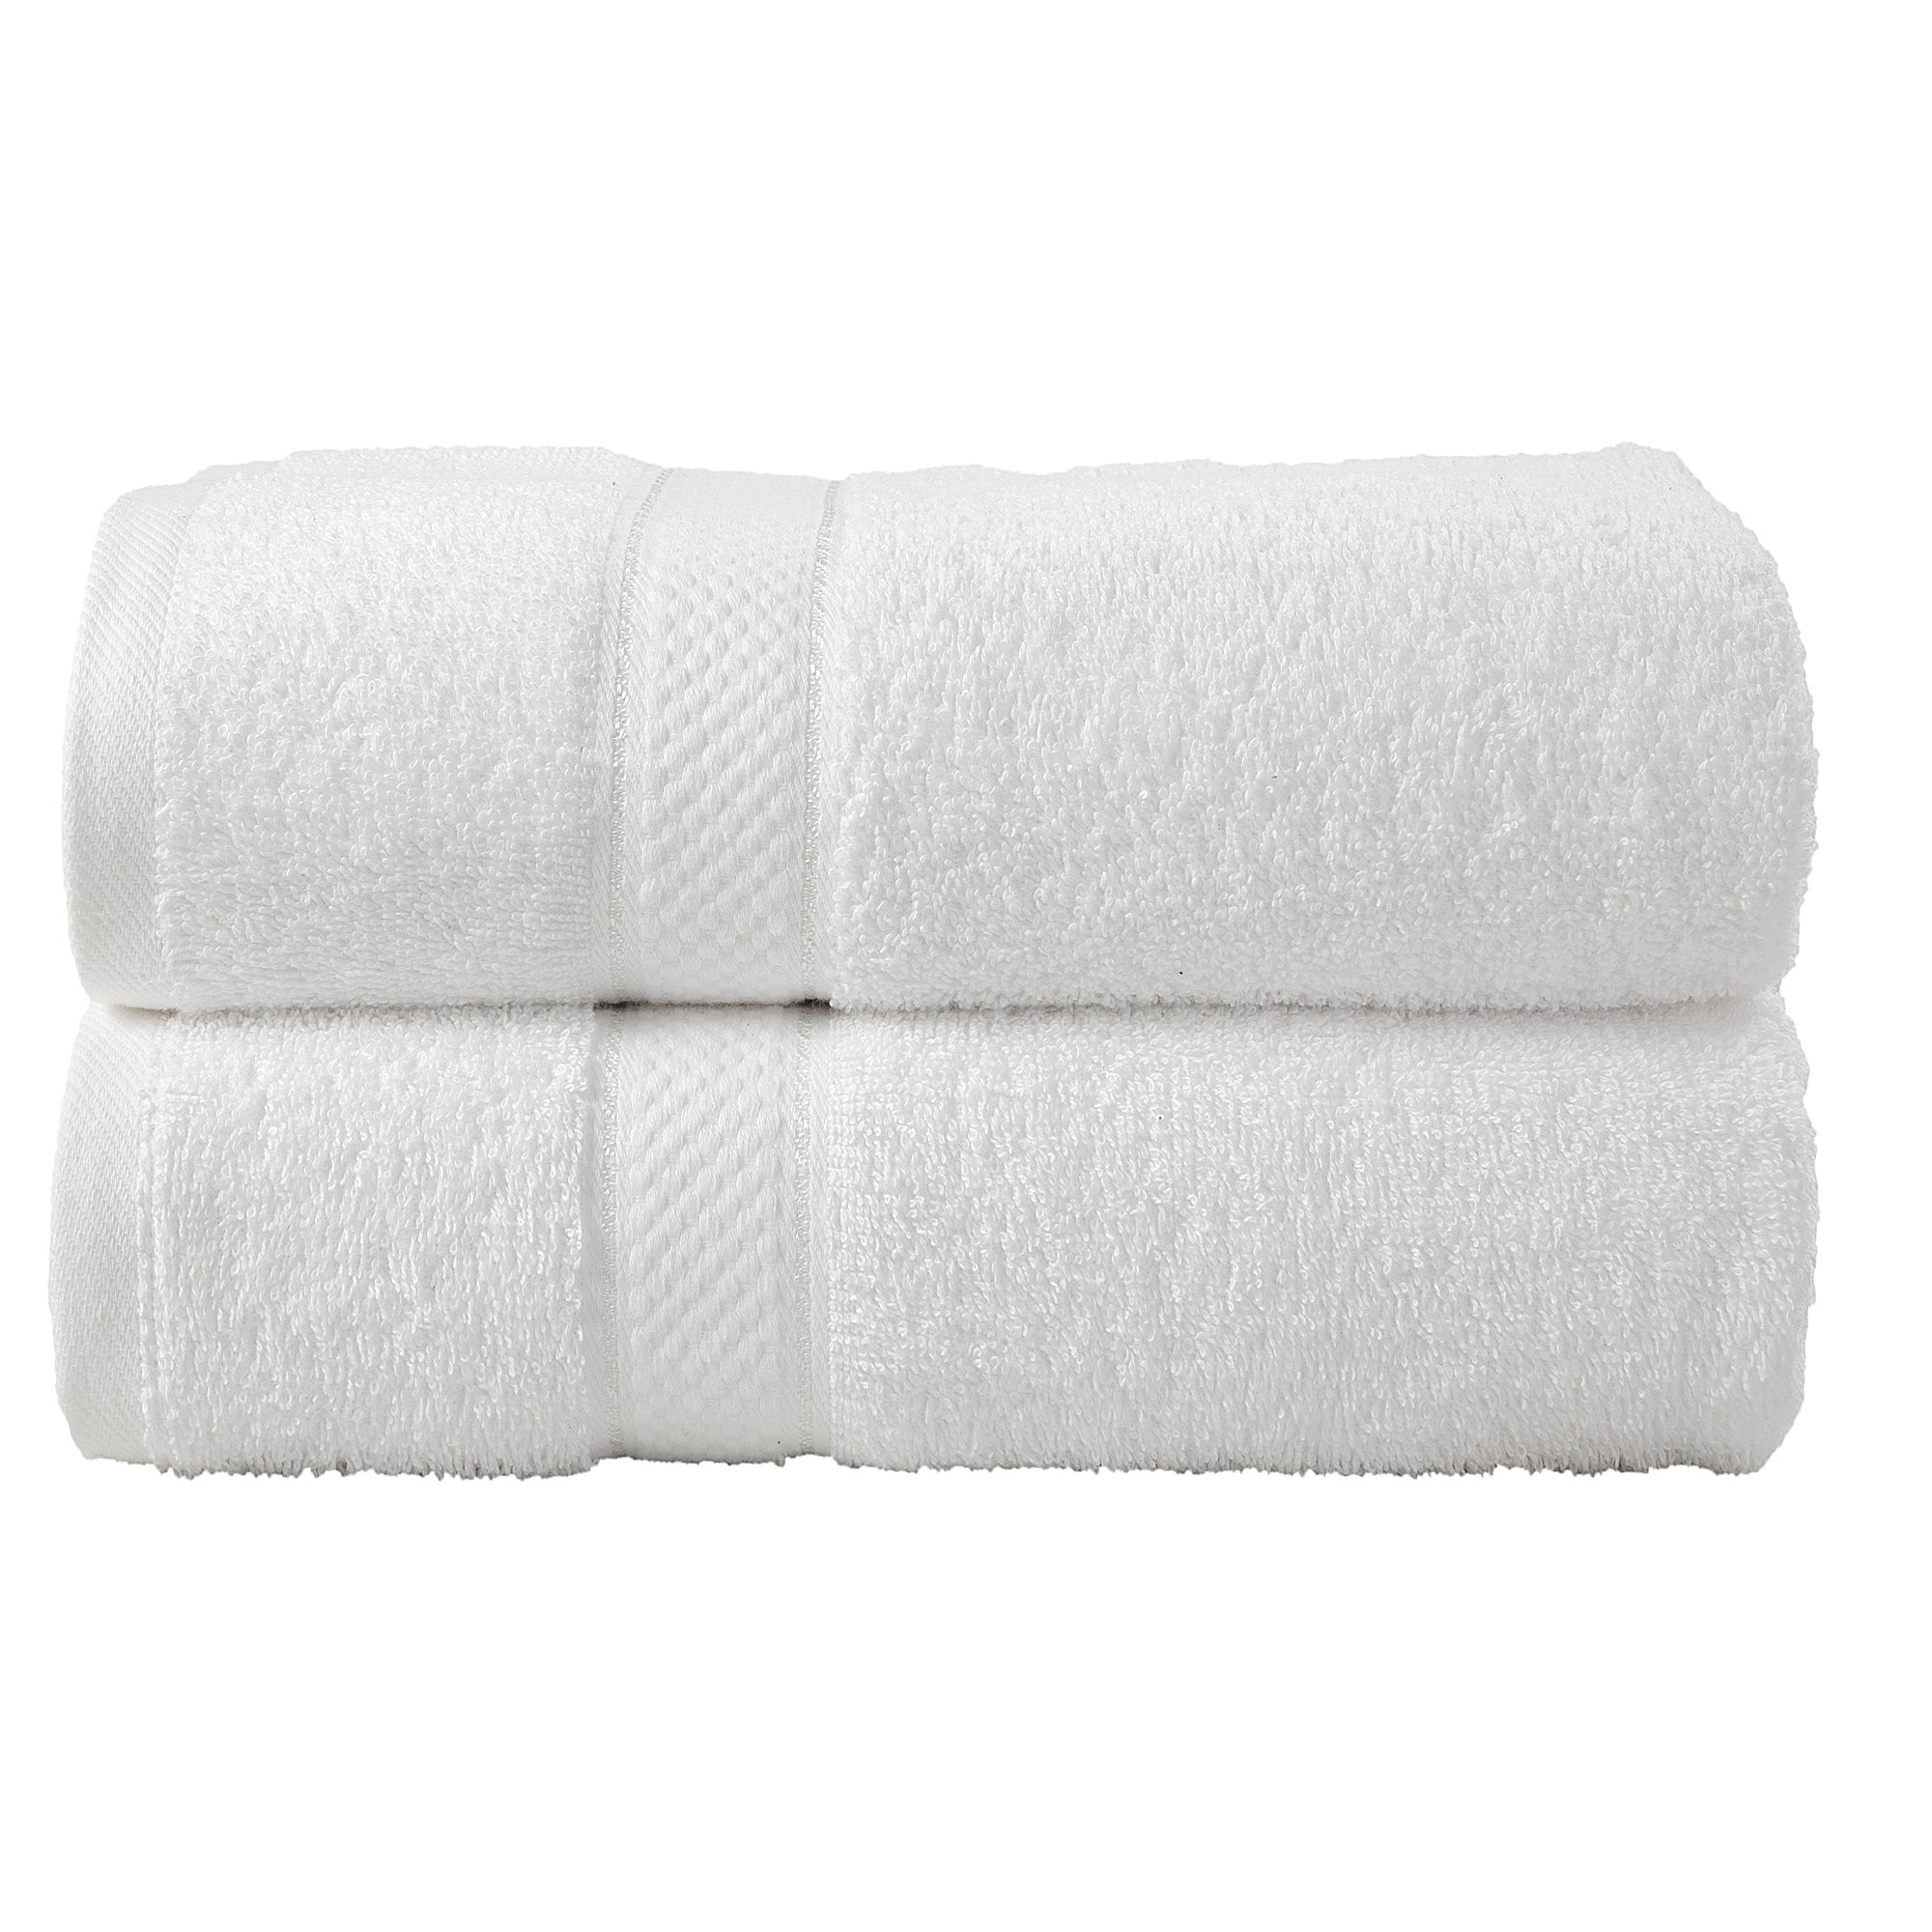 Bale Set 2pcs White Plain Extra Large Bath Sheet Towel